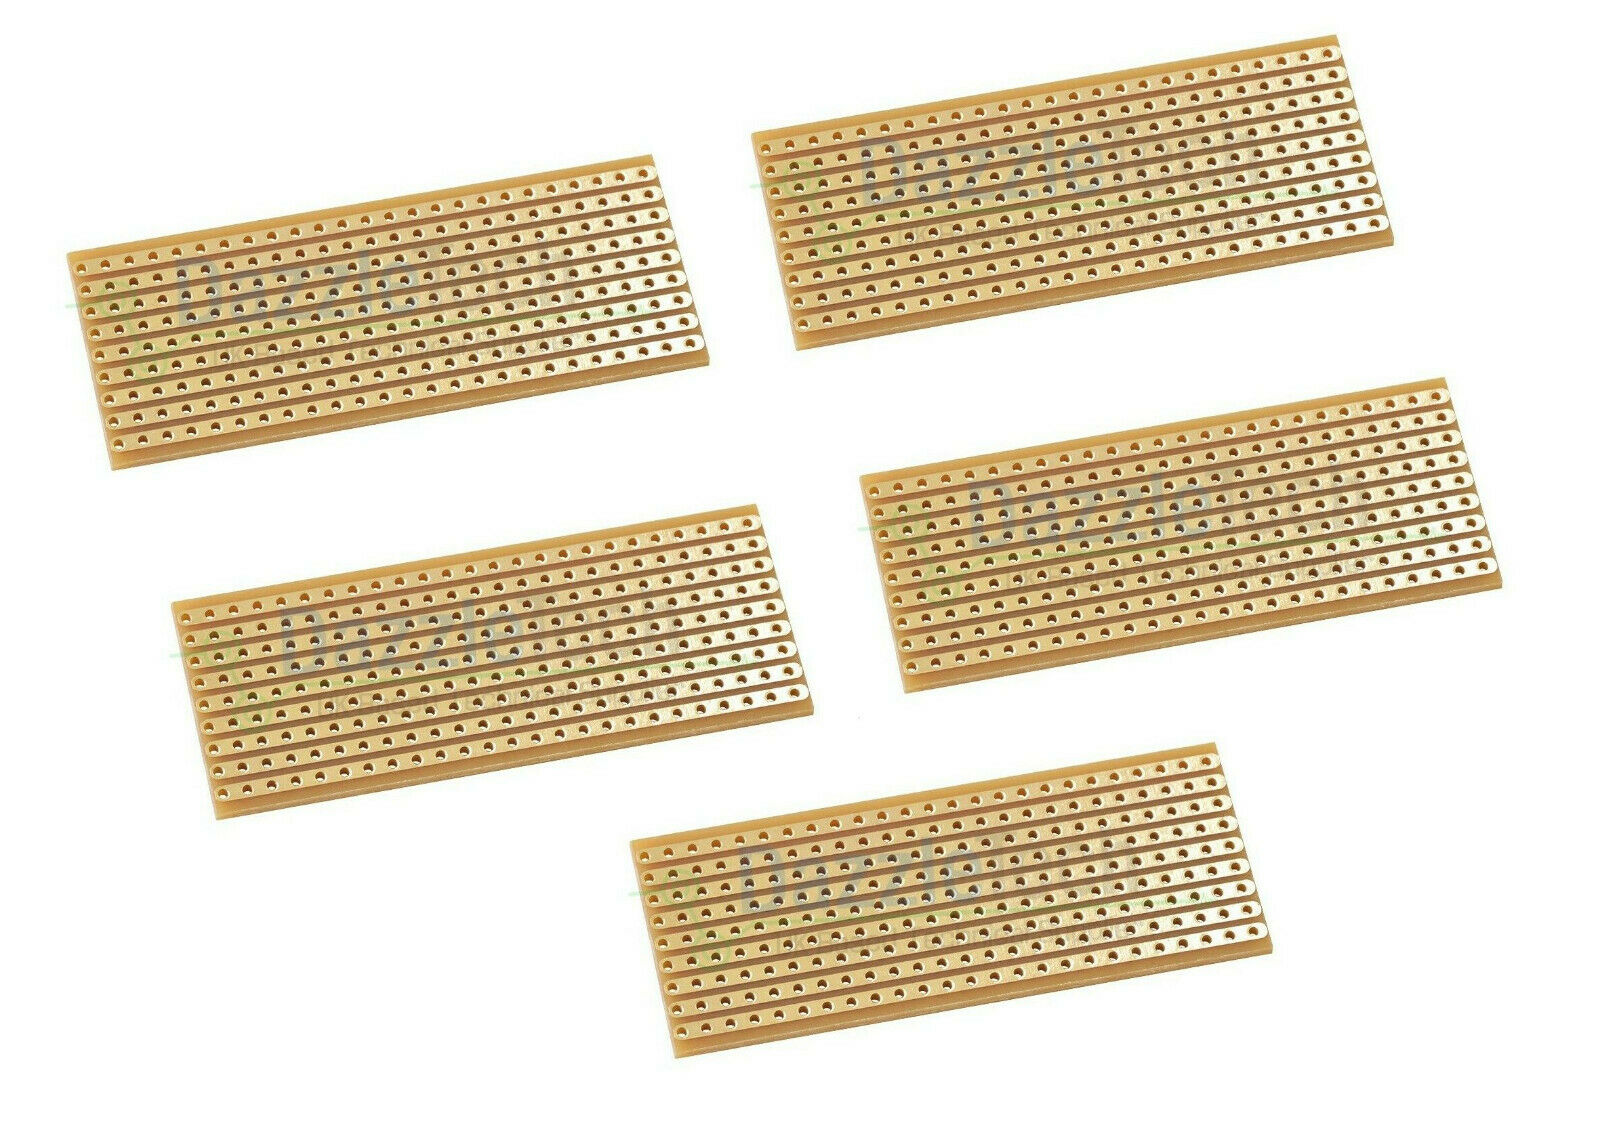 5 x Copper stripboard 25x64mm prototyping solder veroboard